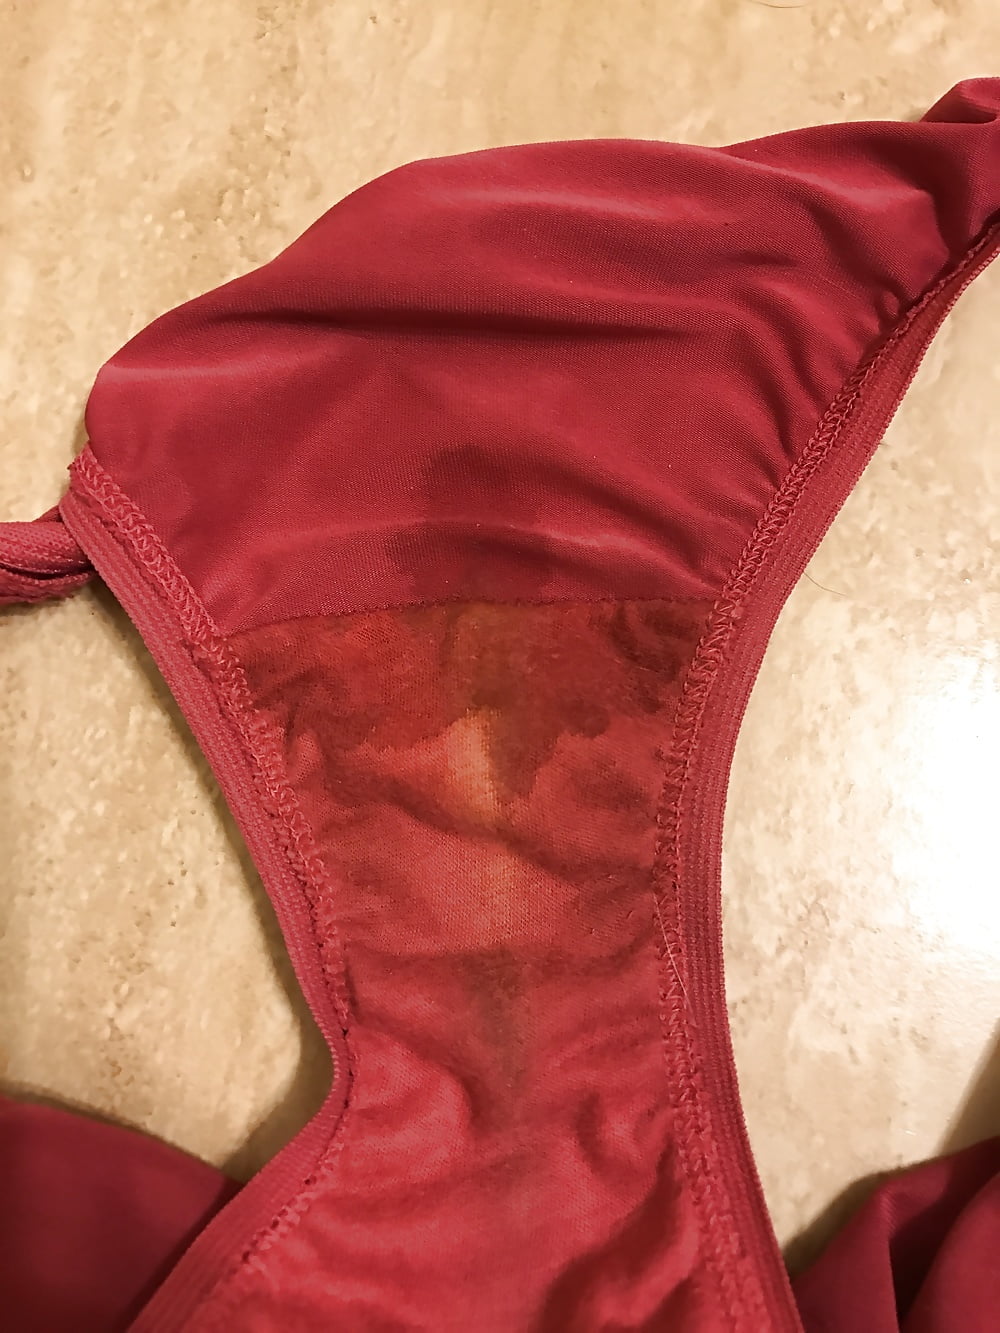 XXX Wife's dirty, smelly panties